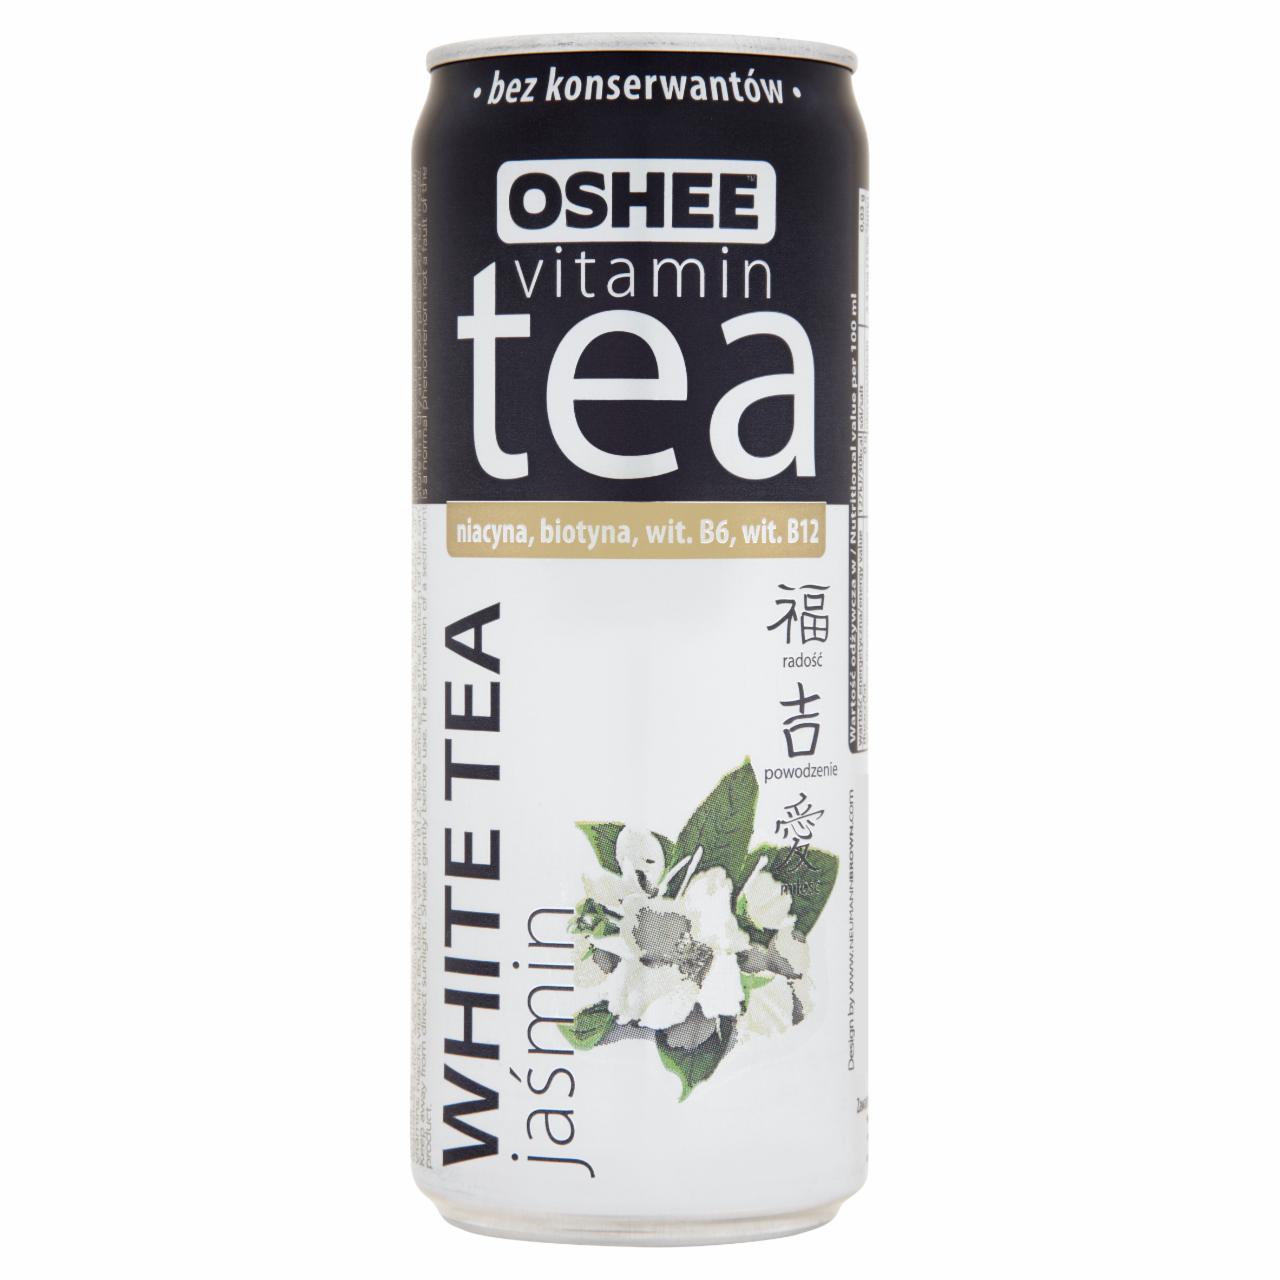 Zdjęcia - Oshee Vitamin Tea White Tea Herbata biała jaśminowa 330 ml